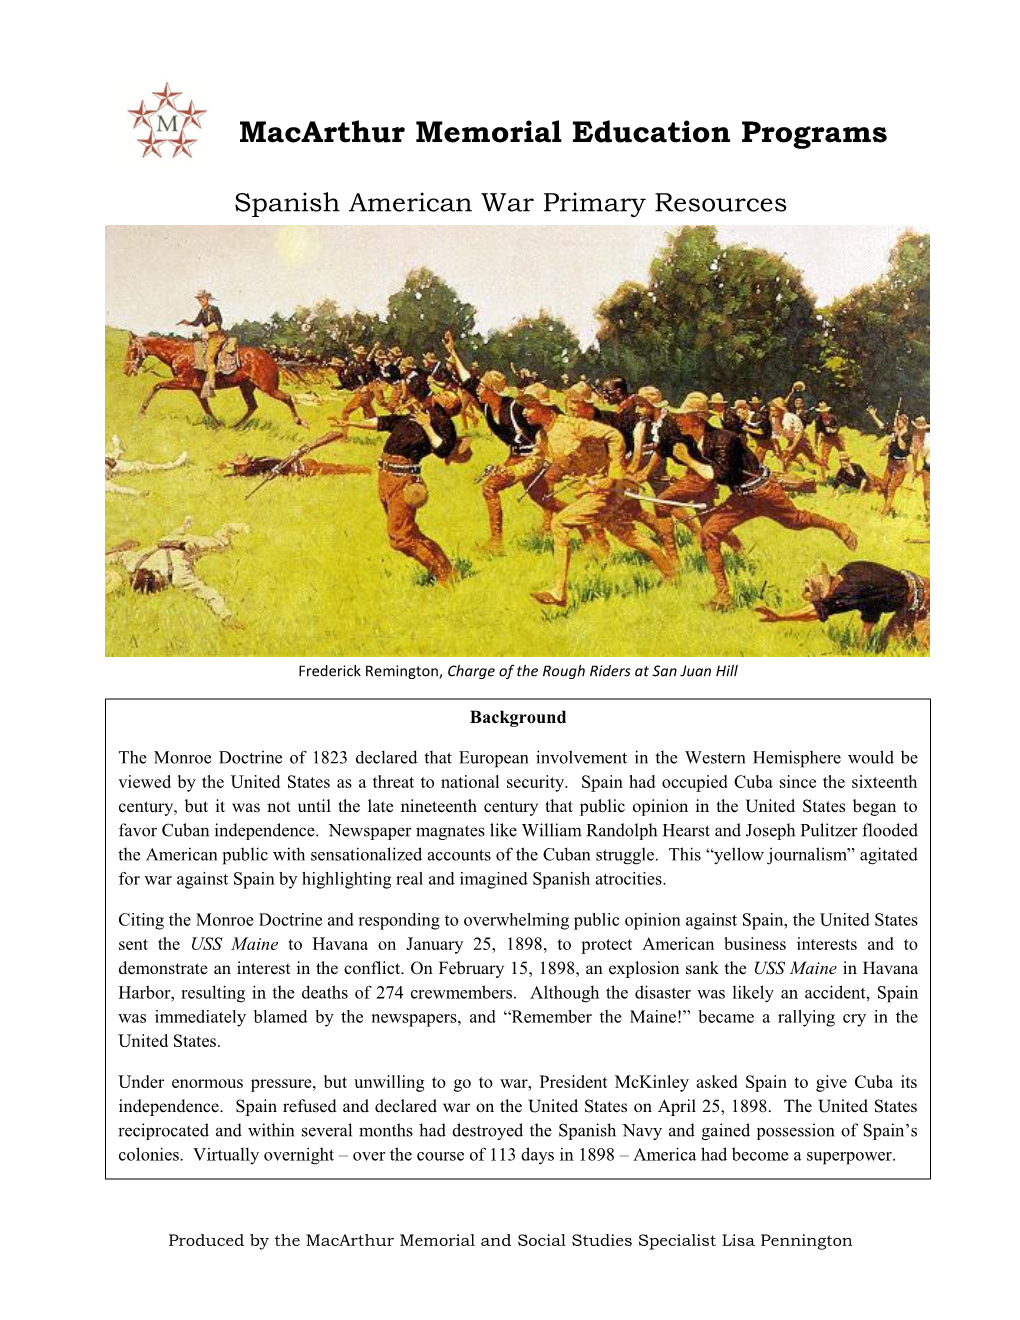 Spanish American War Education Resources